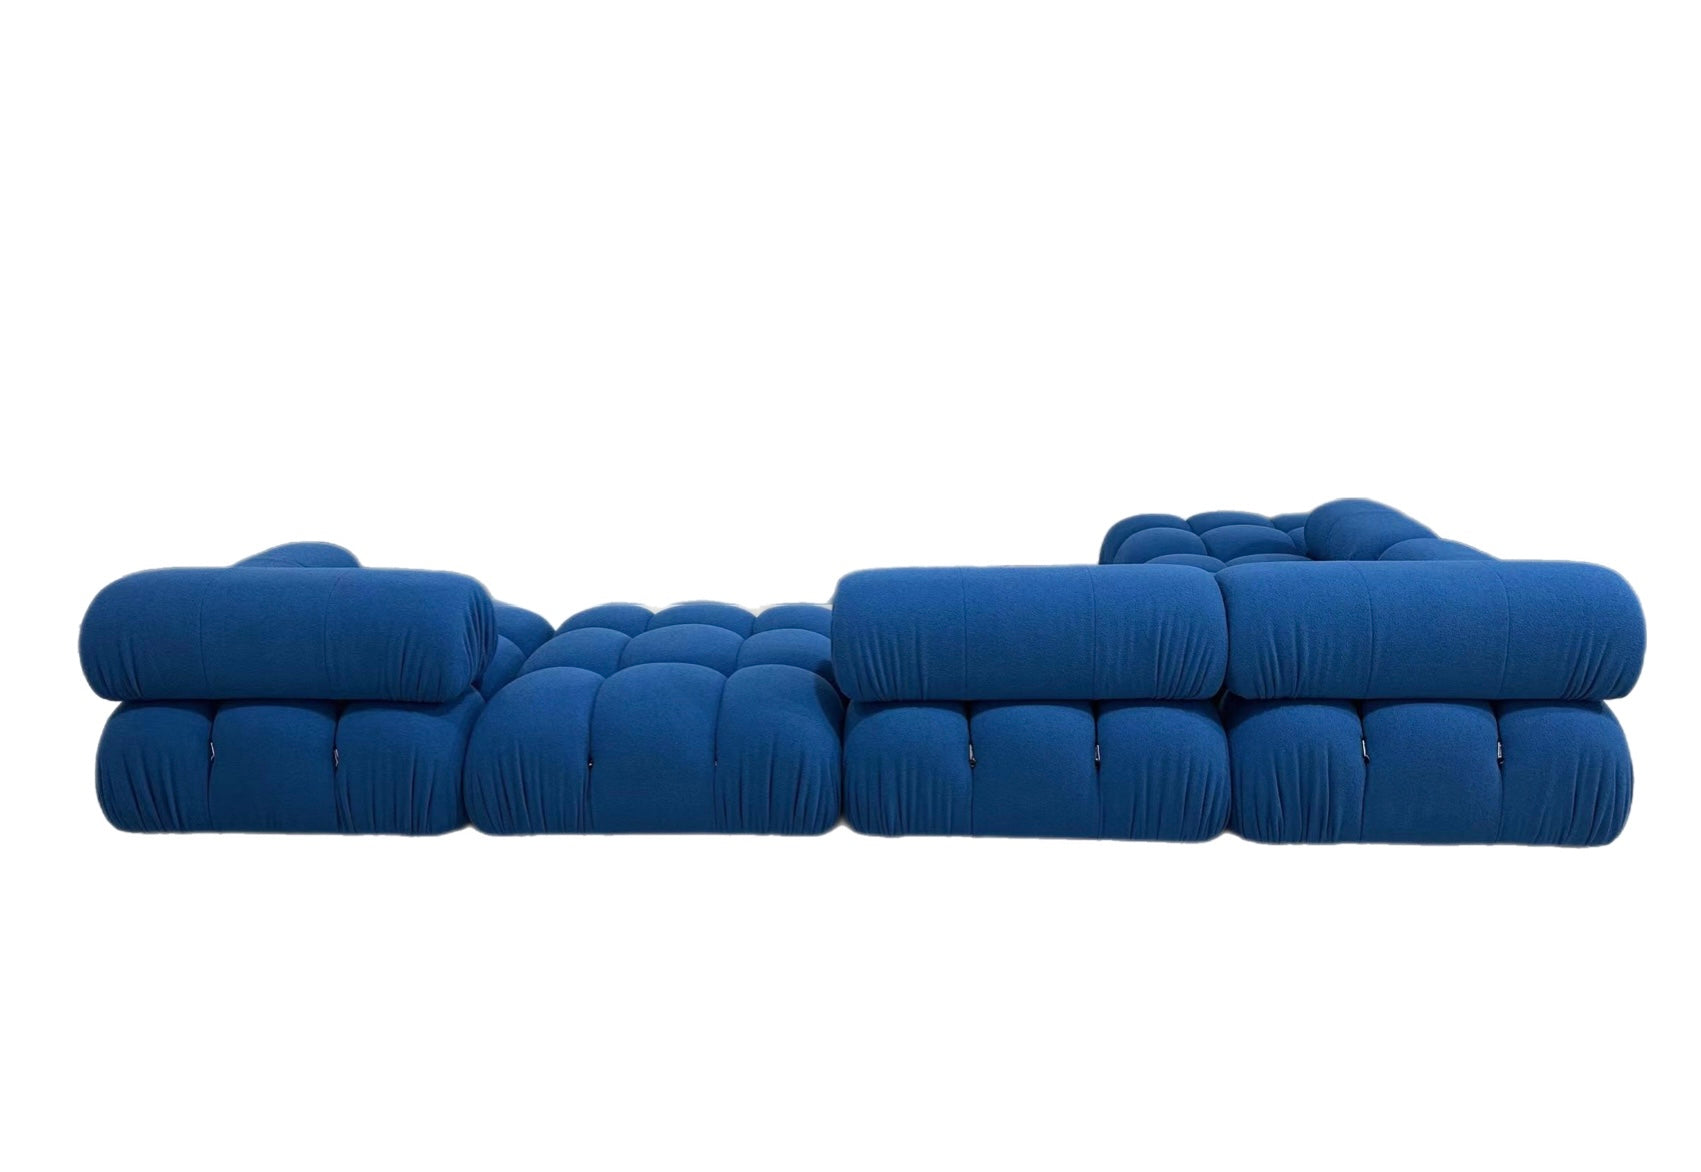 Blue Modular sofa - Choice of Fabric & Colour Made To Order